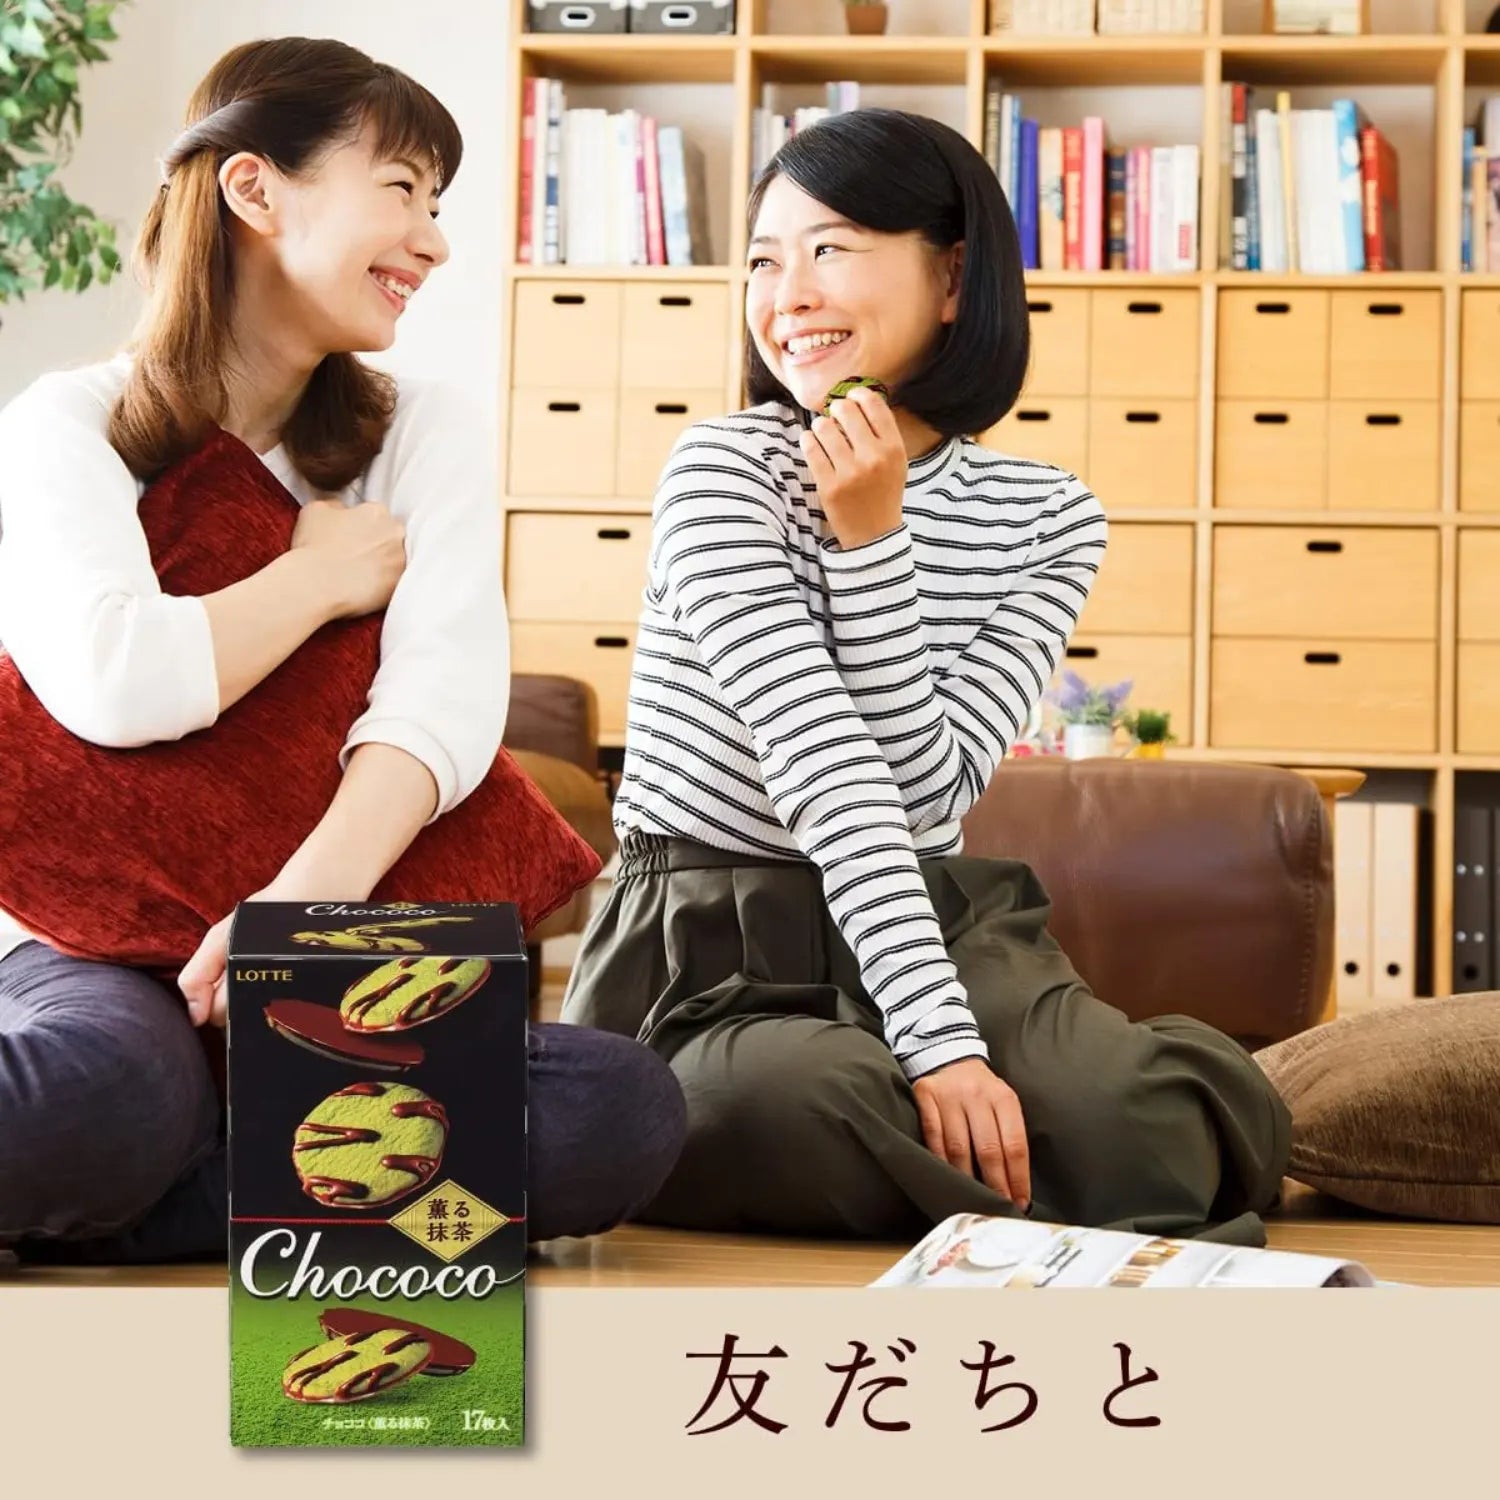 Lotte Chococo Matcha Chocolate Cookies (17 Units) - Buy Me Japan